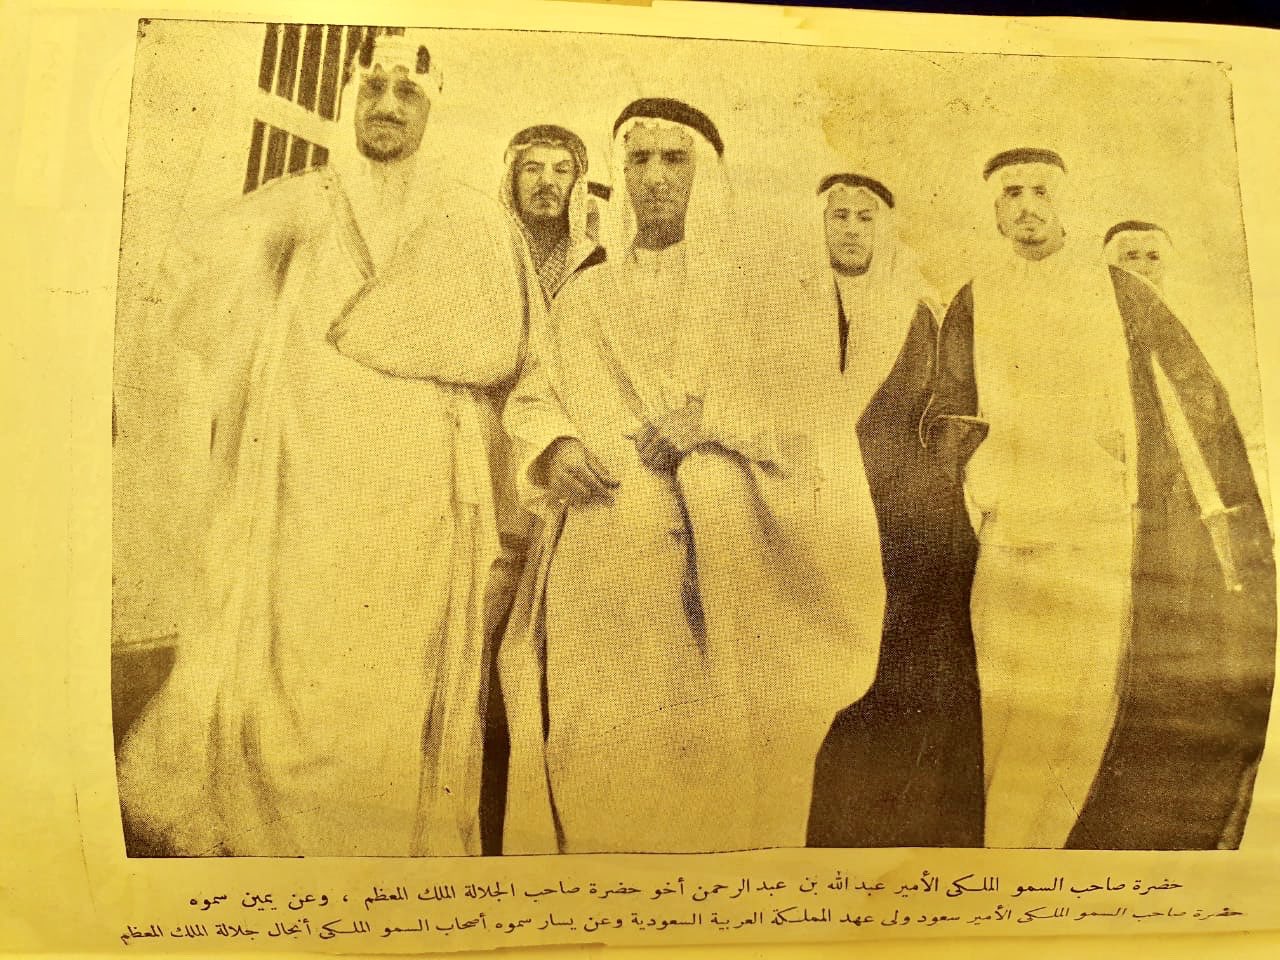 Crown Prince Saud with Prince Abdullah bin Abdulrahman and prince Mishal bin Abdulaziz